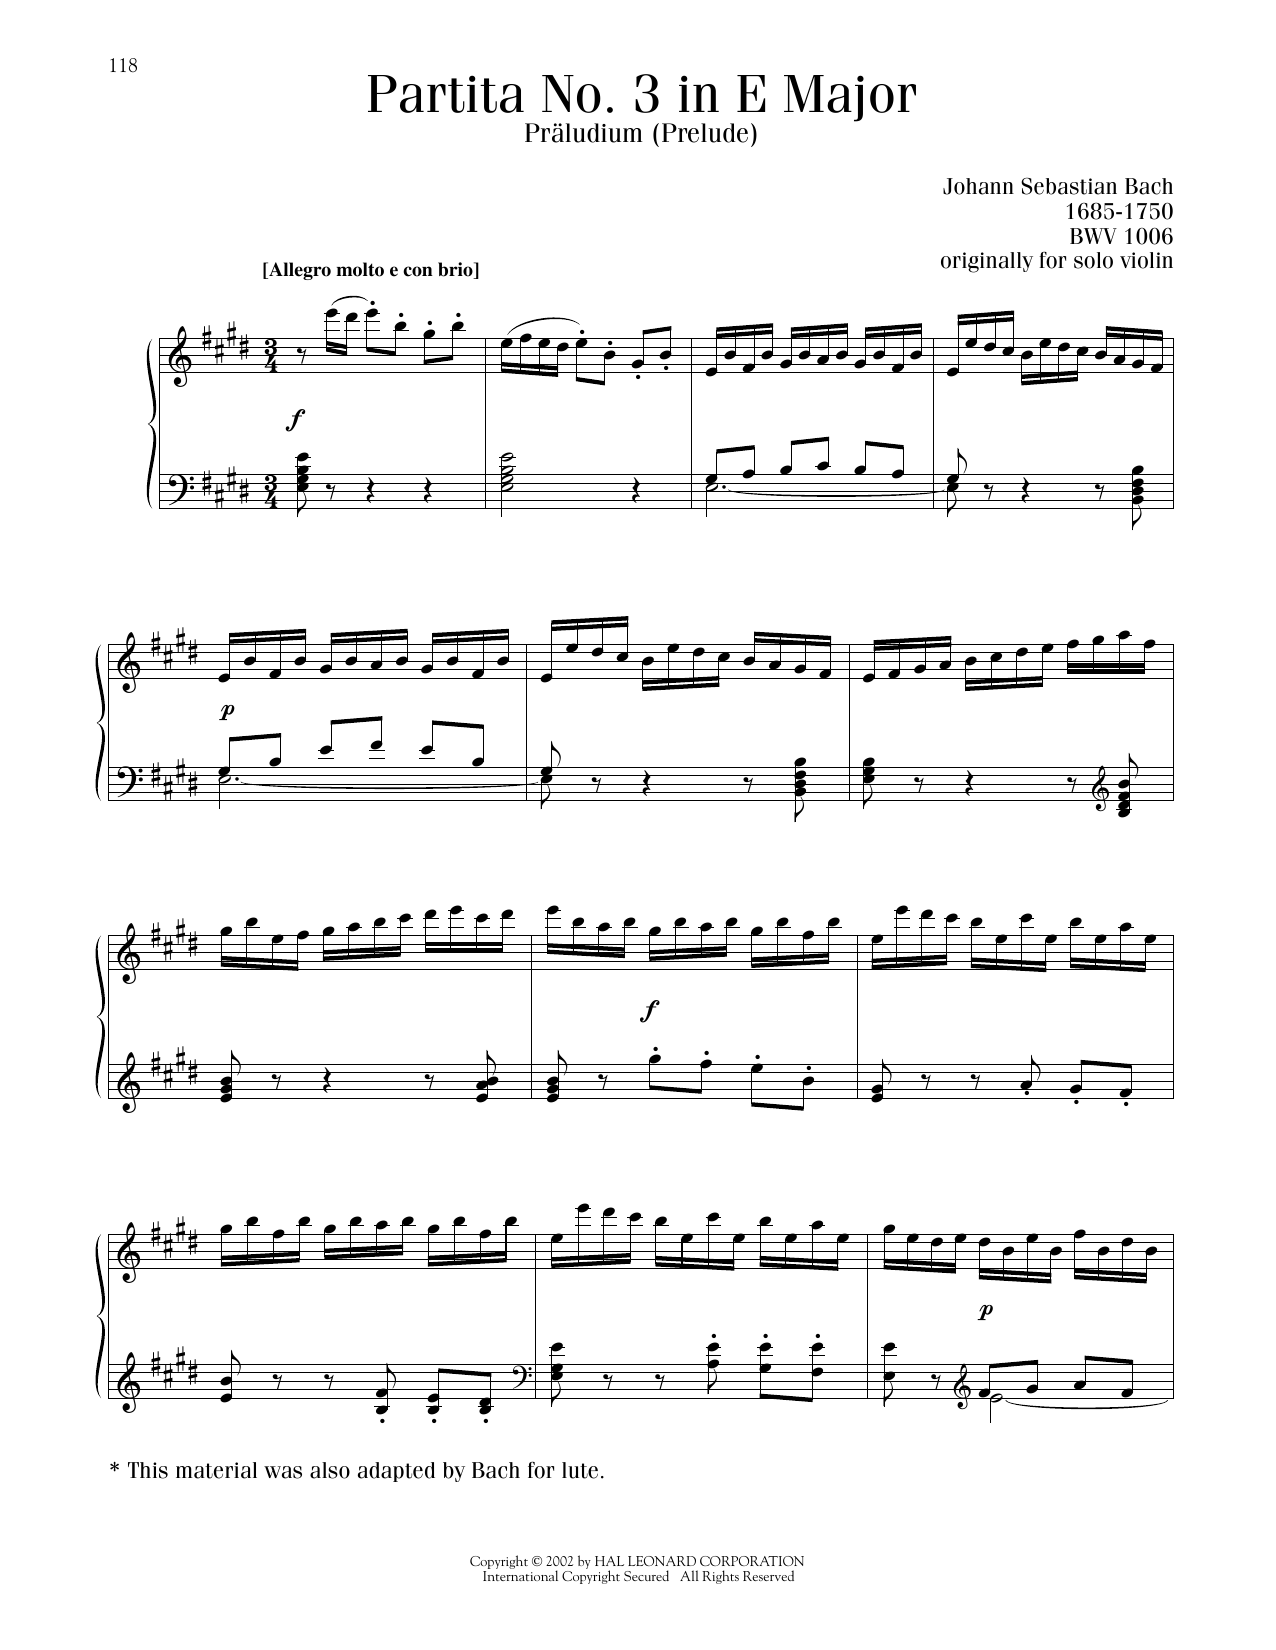 Johann Sebastian Bach Partita No. 3 In E Major, BWV 1006 Sheet Music Notes & Chords for Piano Solo - Download or Print PDF